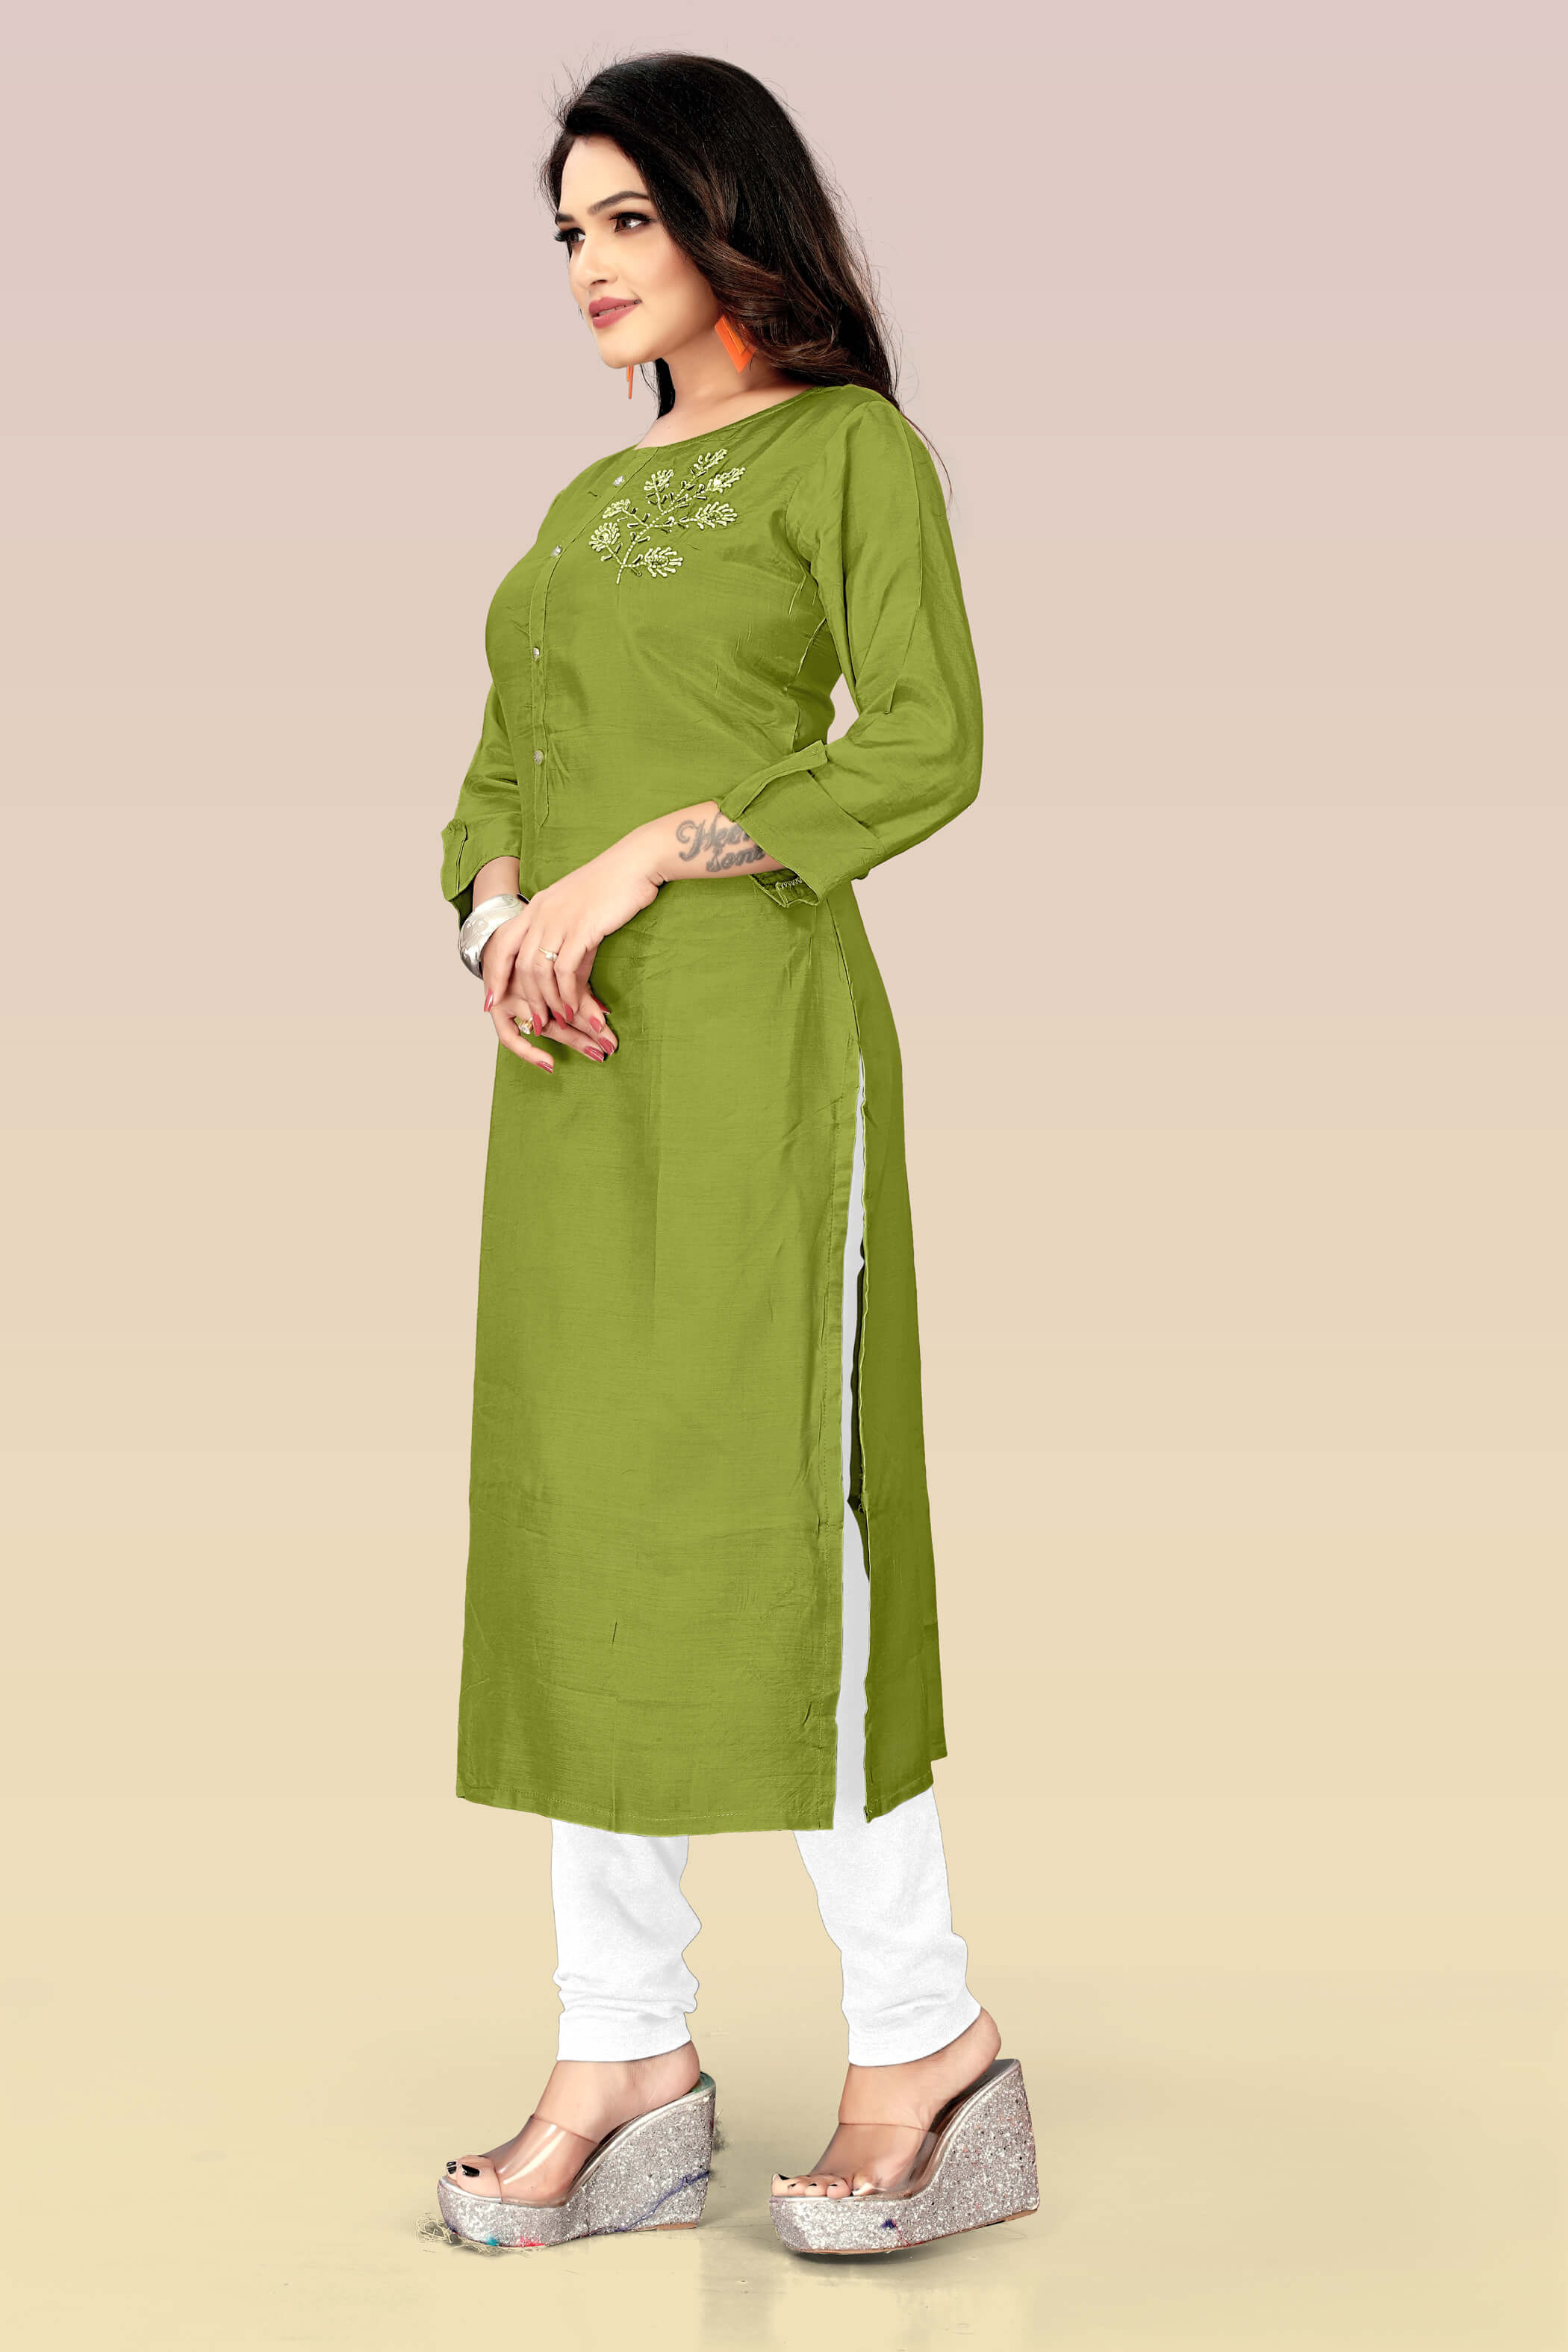 Designer Silk Olive green kurti with stylish handwork